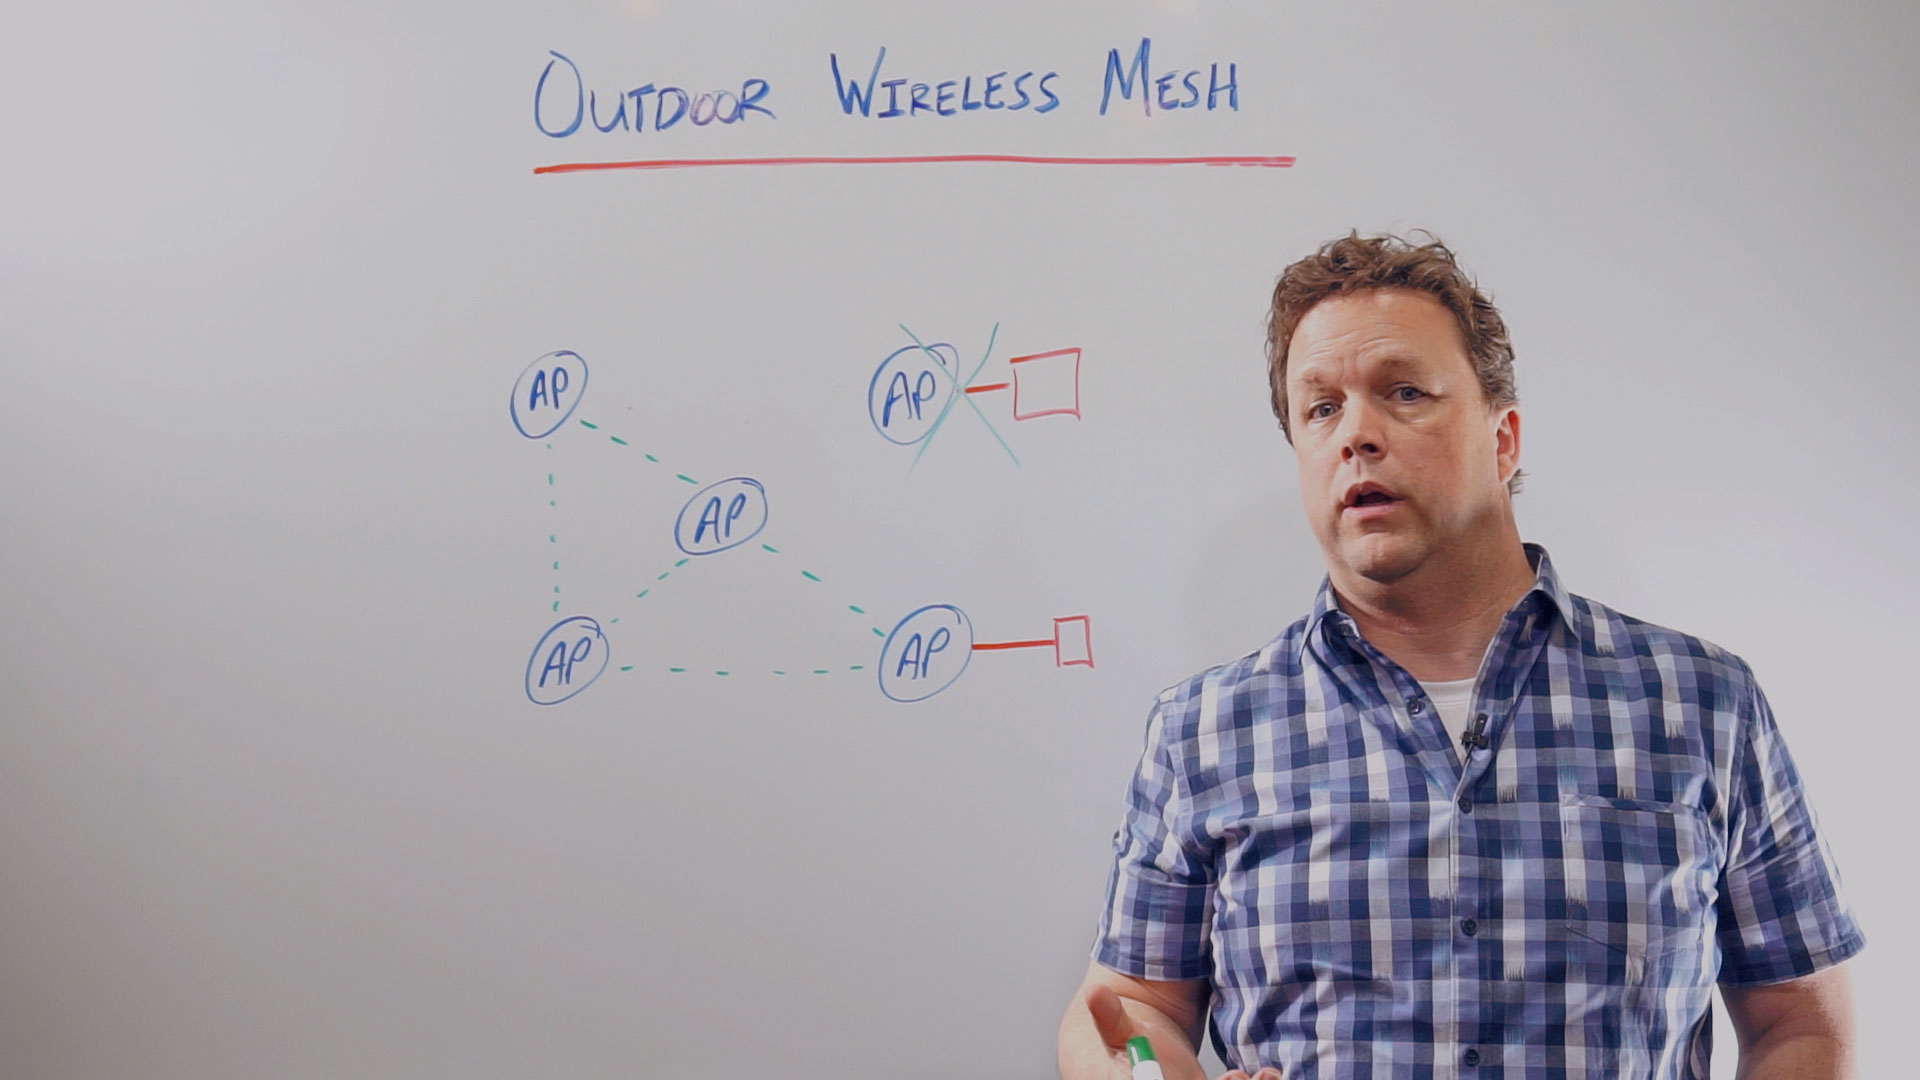 Michael McNamee explaining outdoor wireless mesh